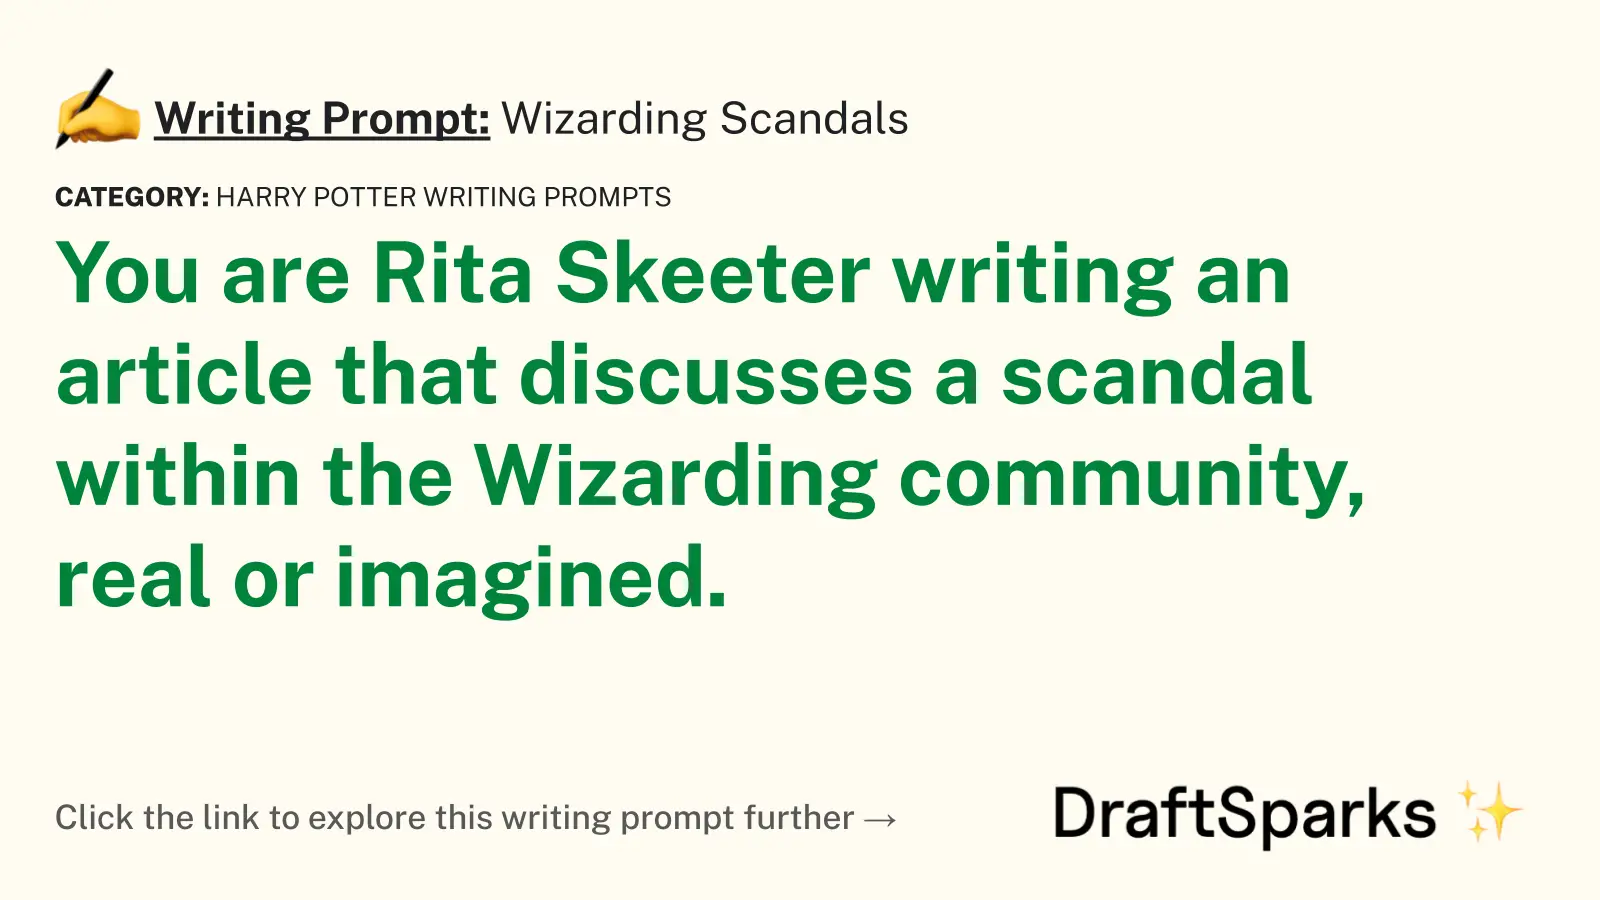 Wizarding Scandals